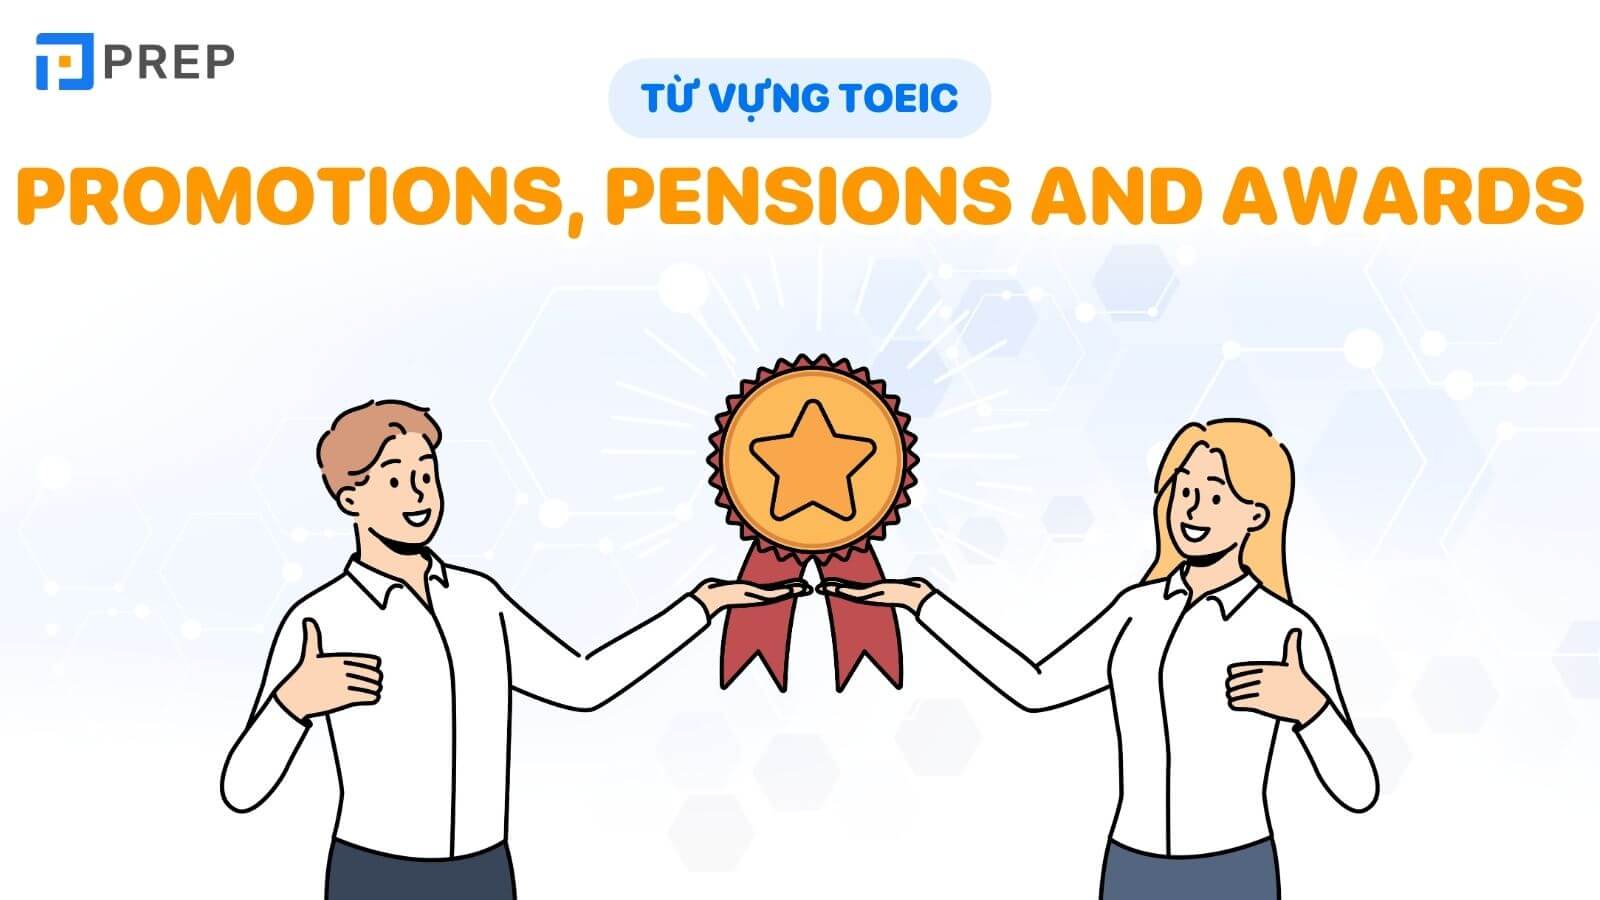 tu-vung-toeic-chu-de-promotions-pensions-and-awards.jpg